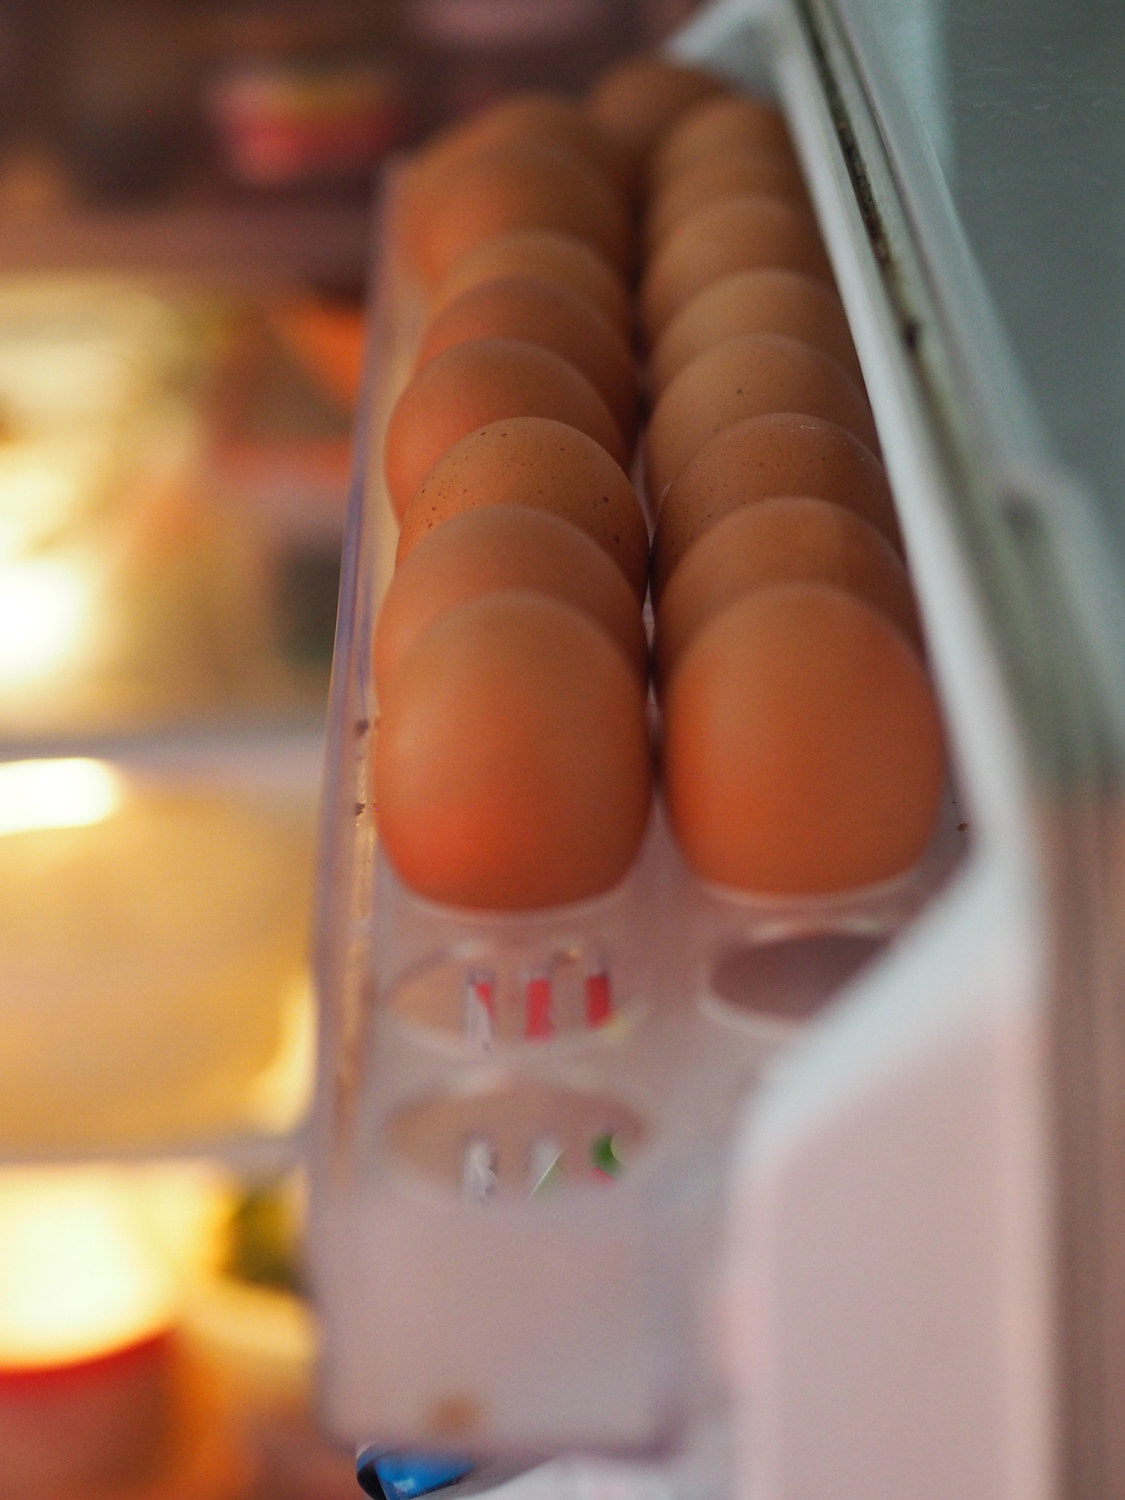 Eggs in the refrigerator